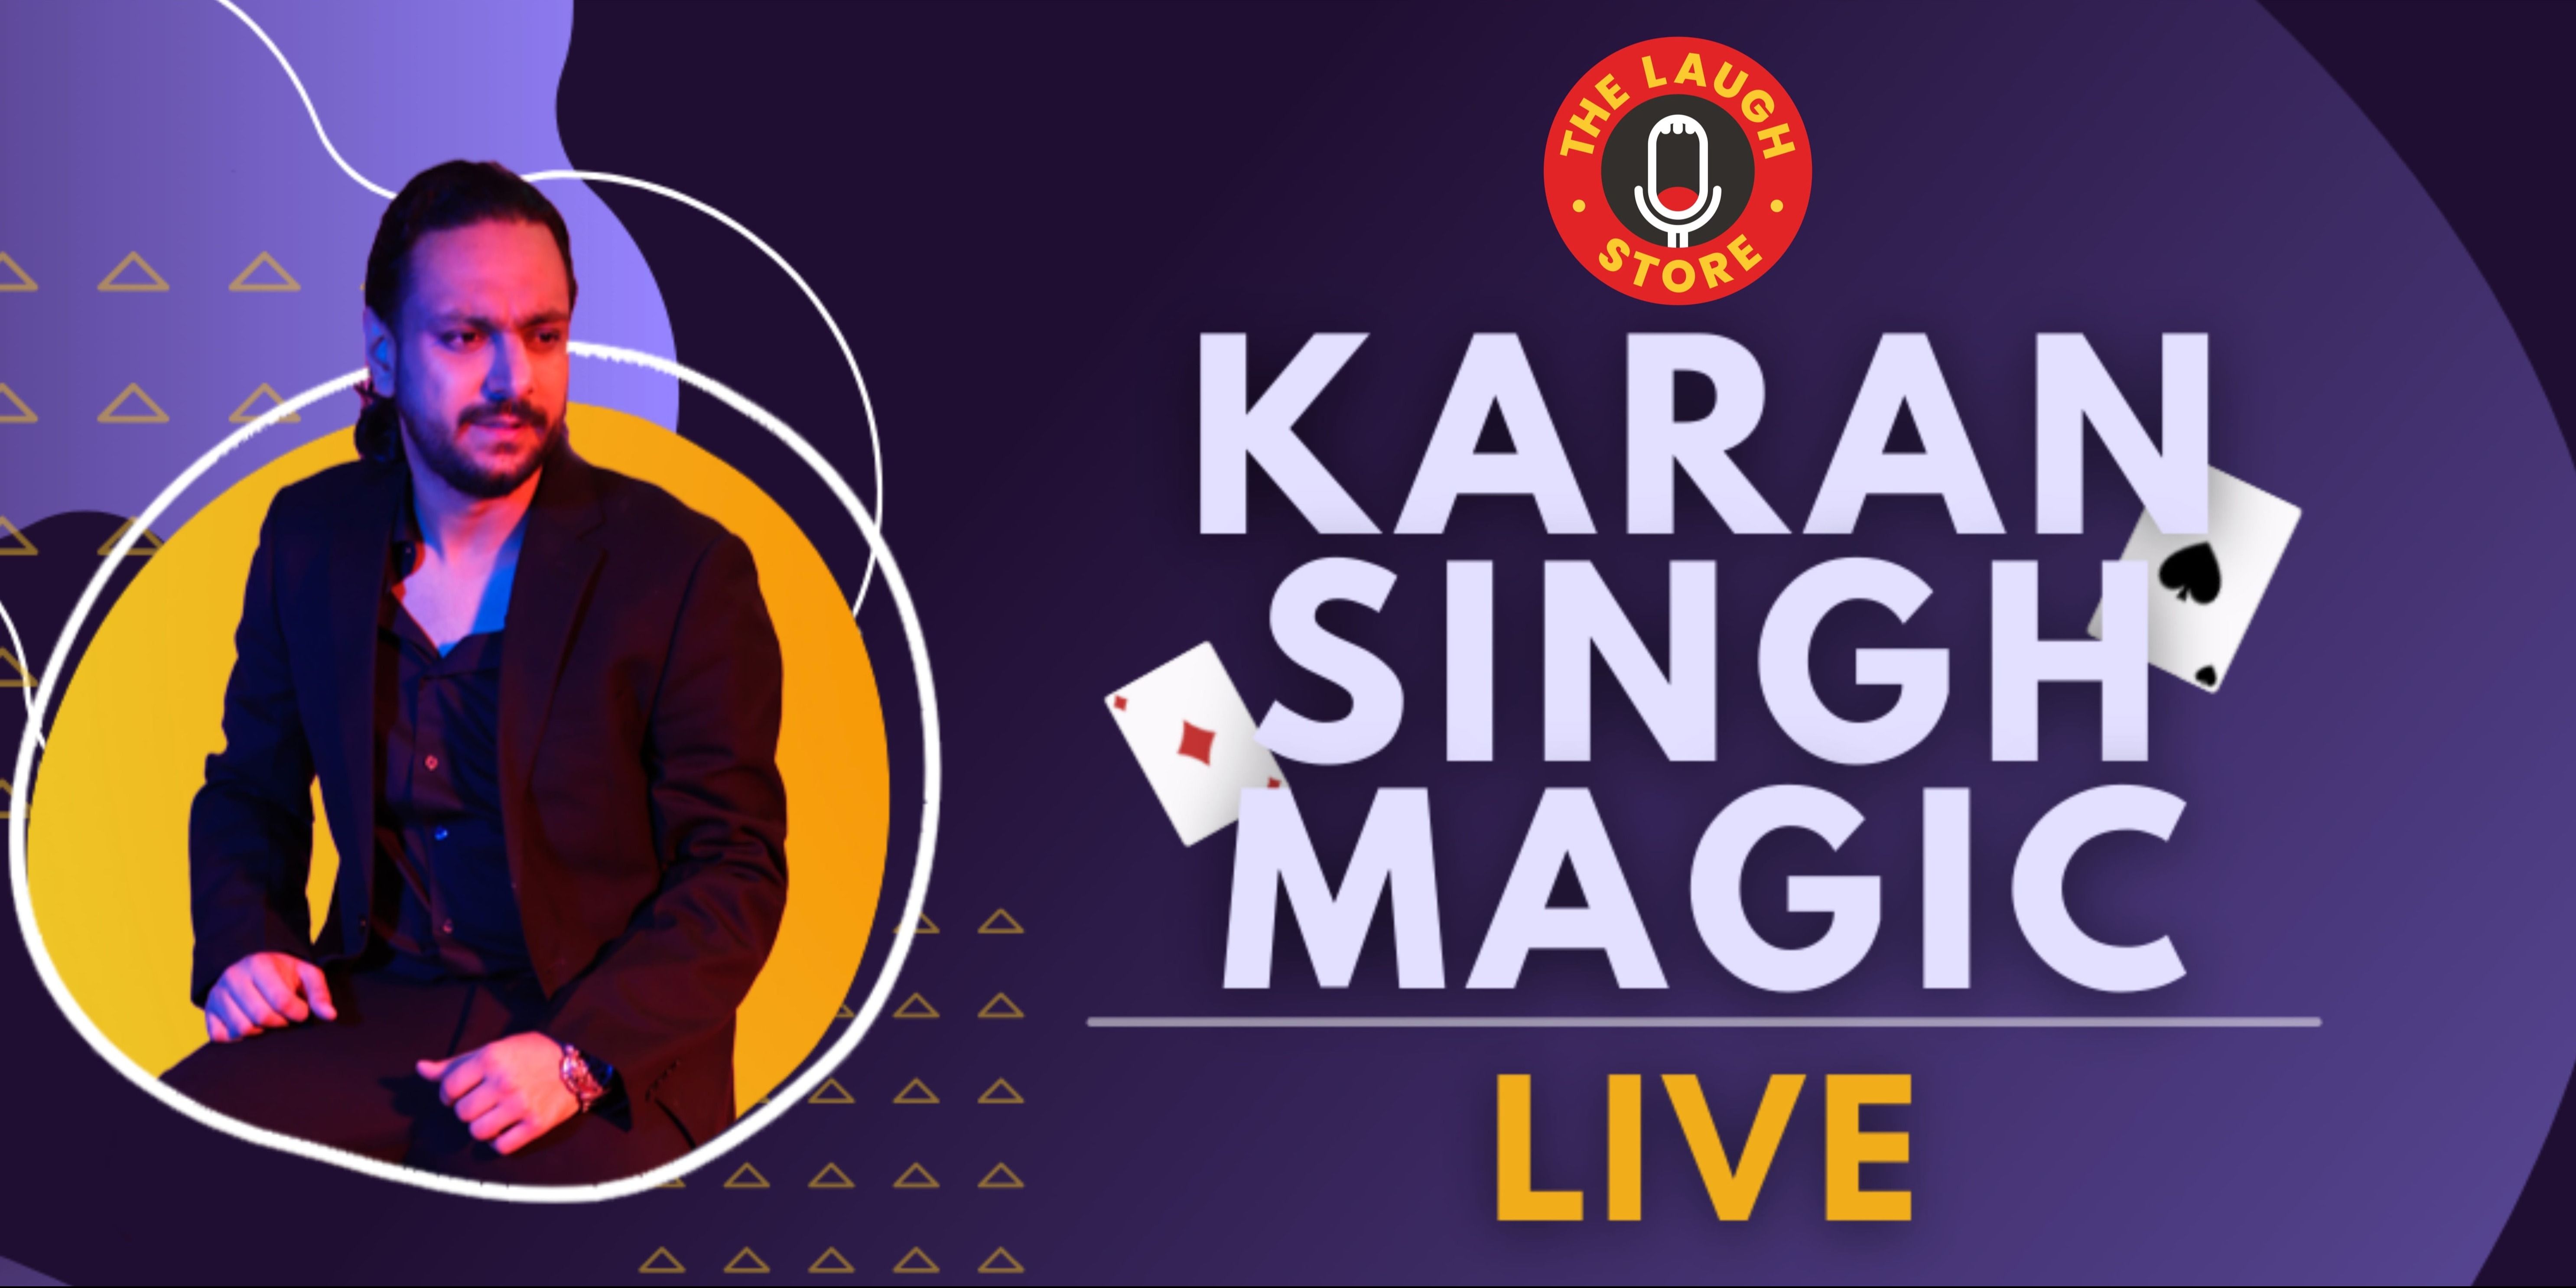 Karan Singh Magic Live in Delhi